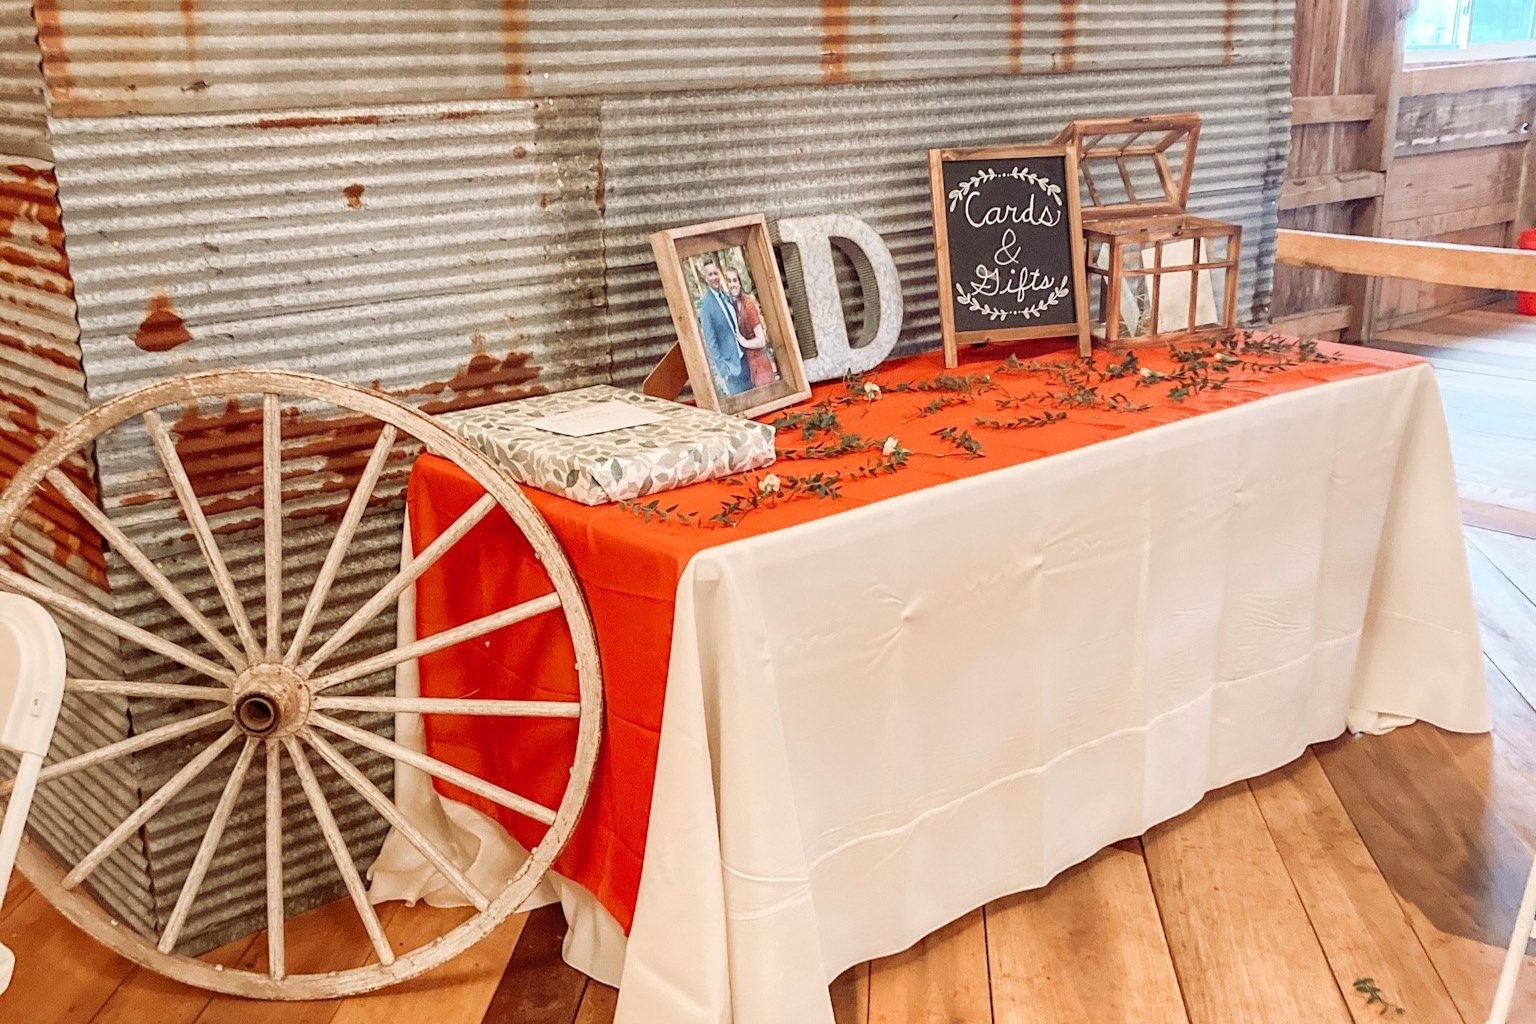 Wedding gift table in rustic Ohio barn venue